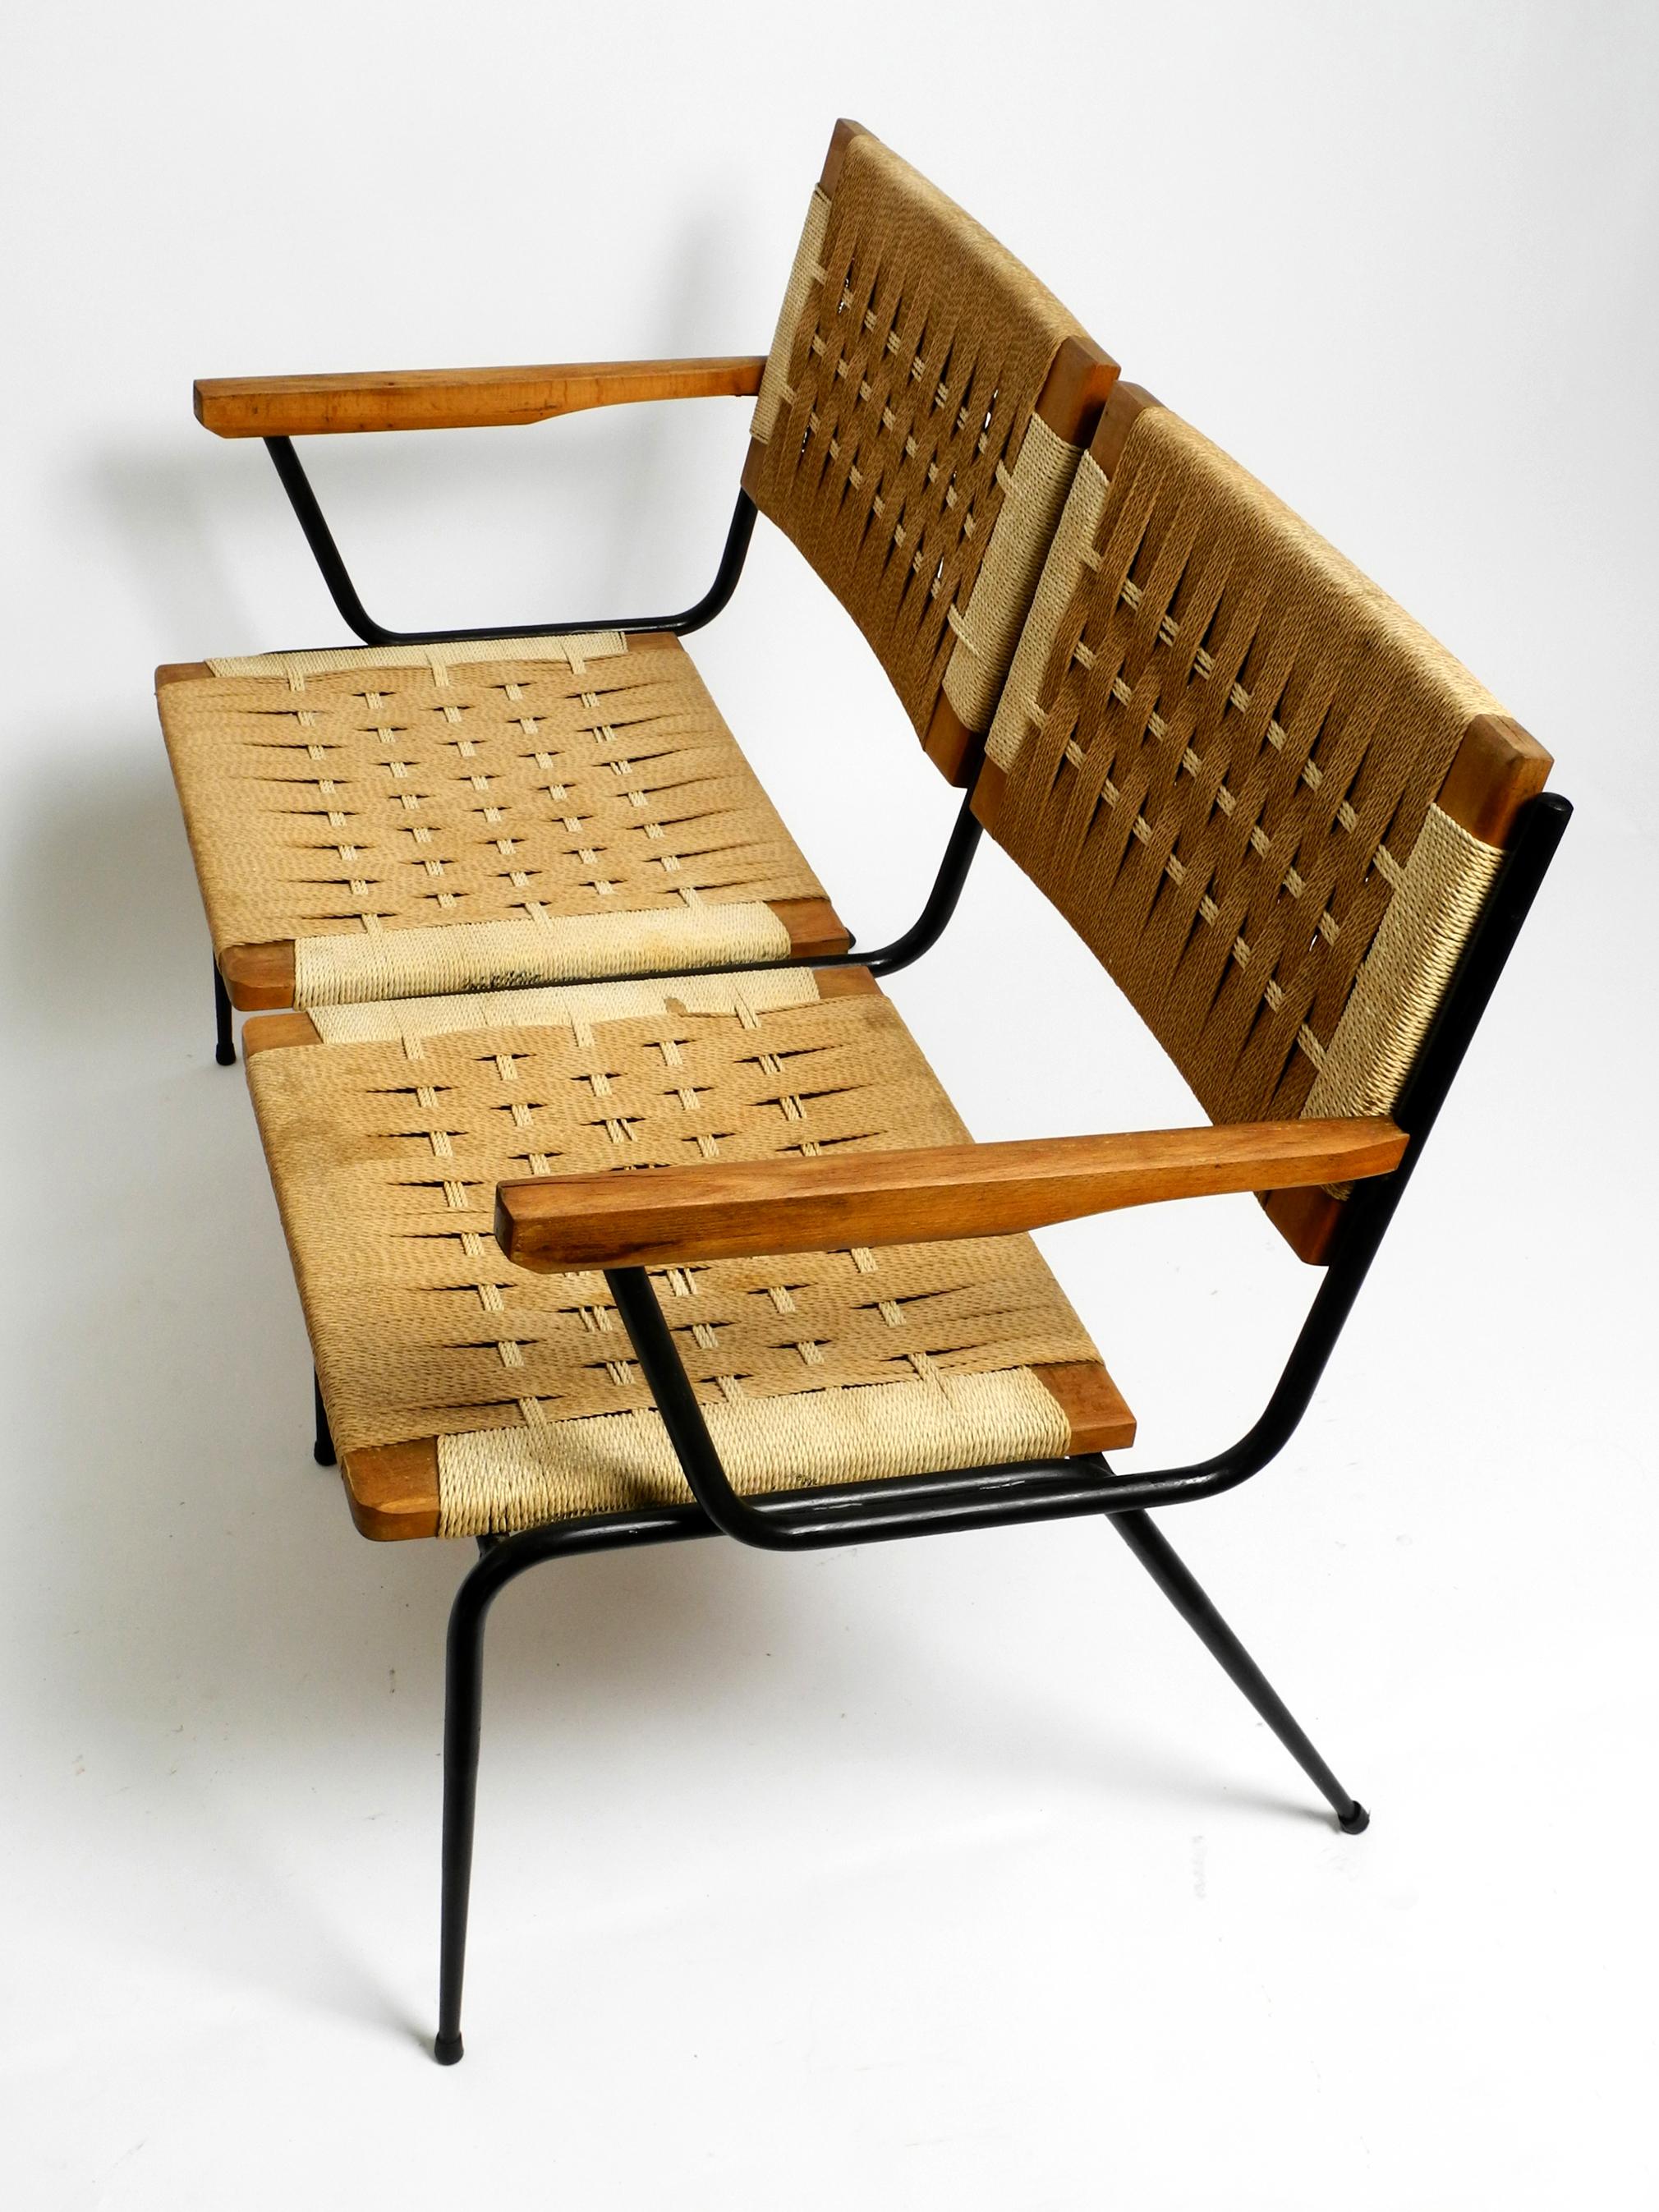 Wicker 1950s Italian bench made of iron frame and rush wickerwork by Giuseppe Pagano